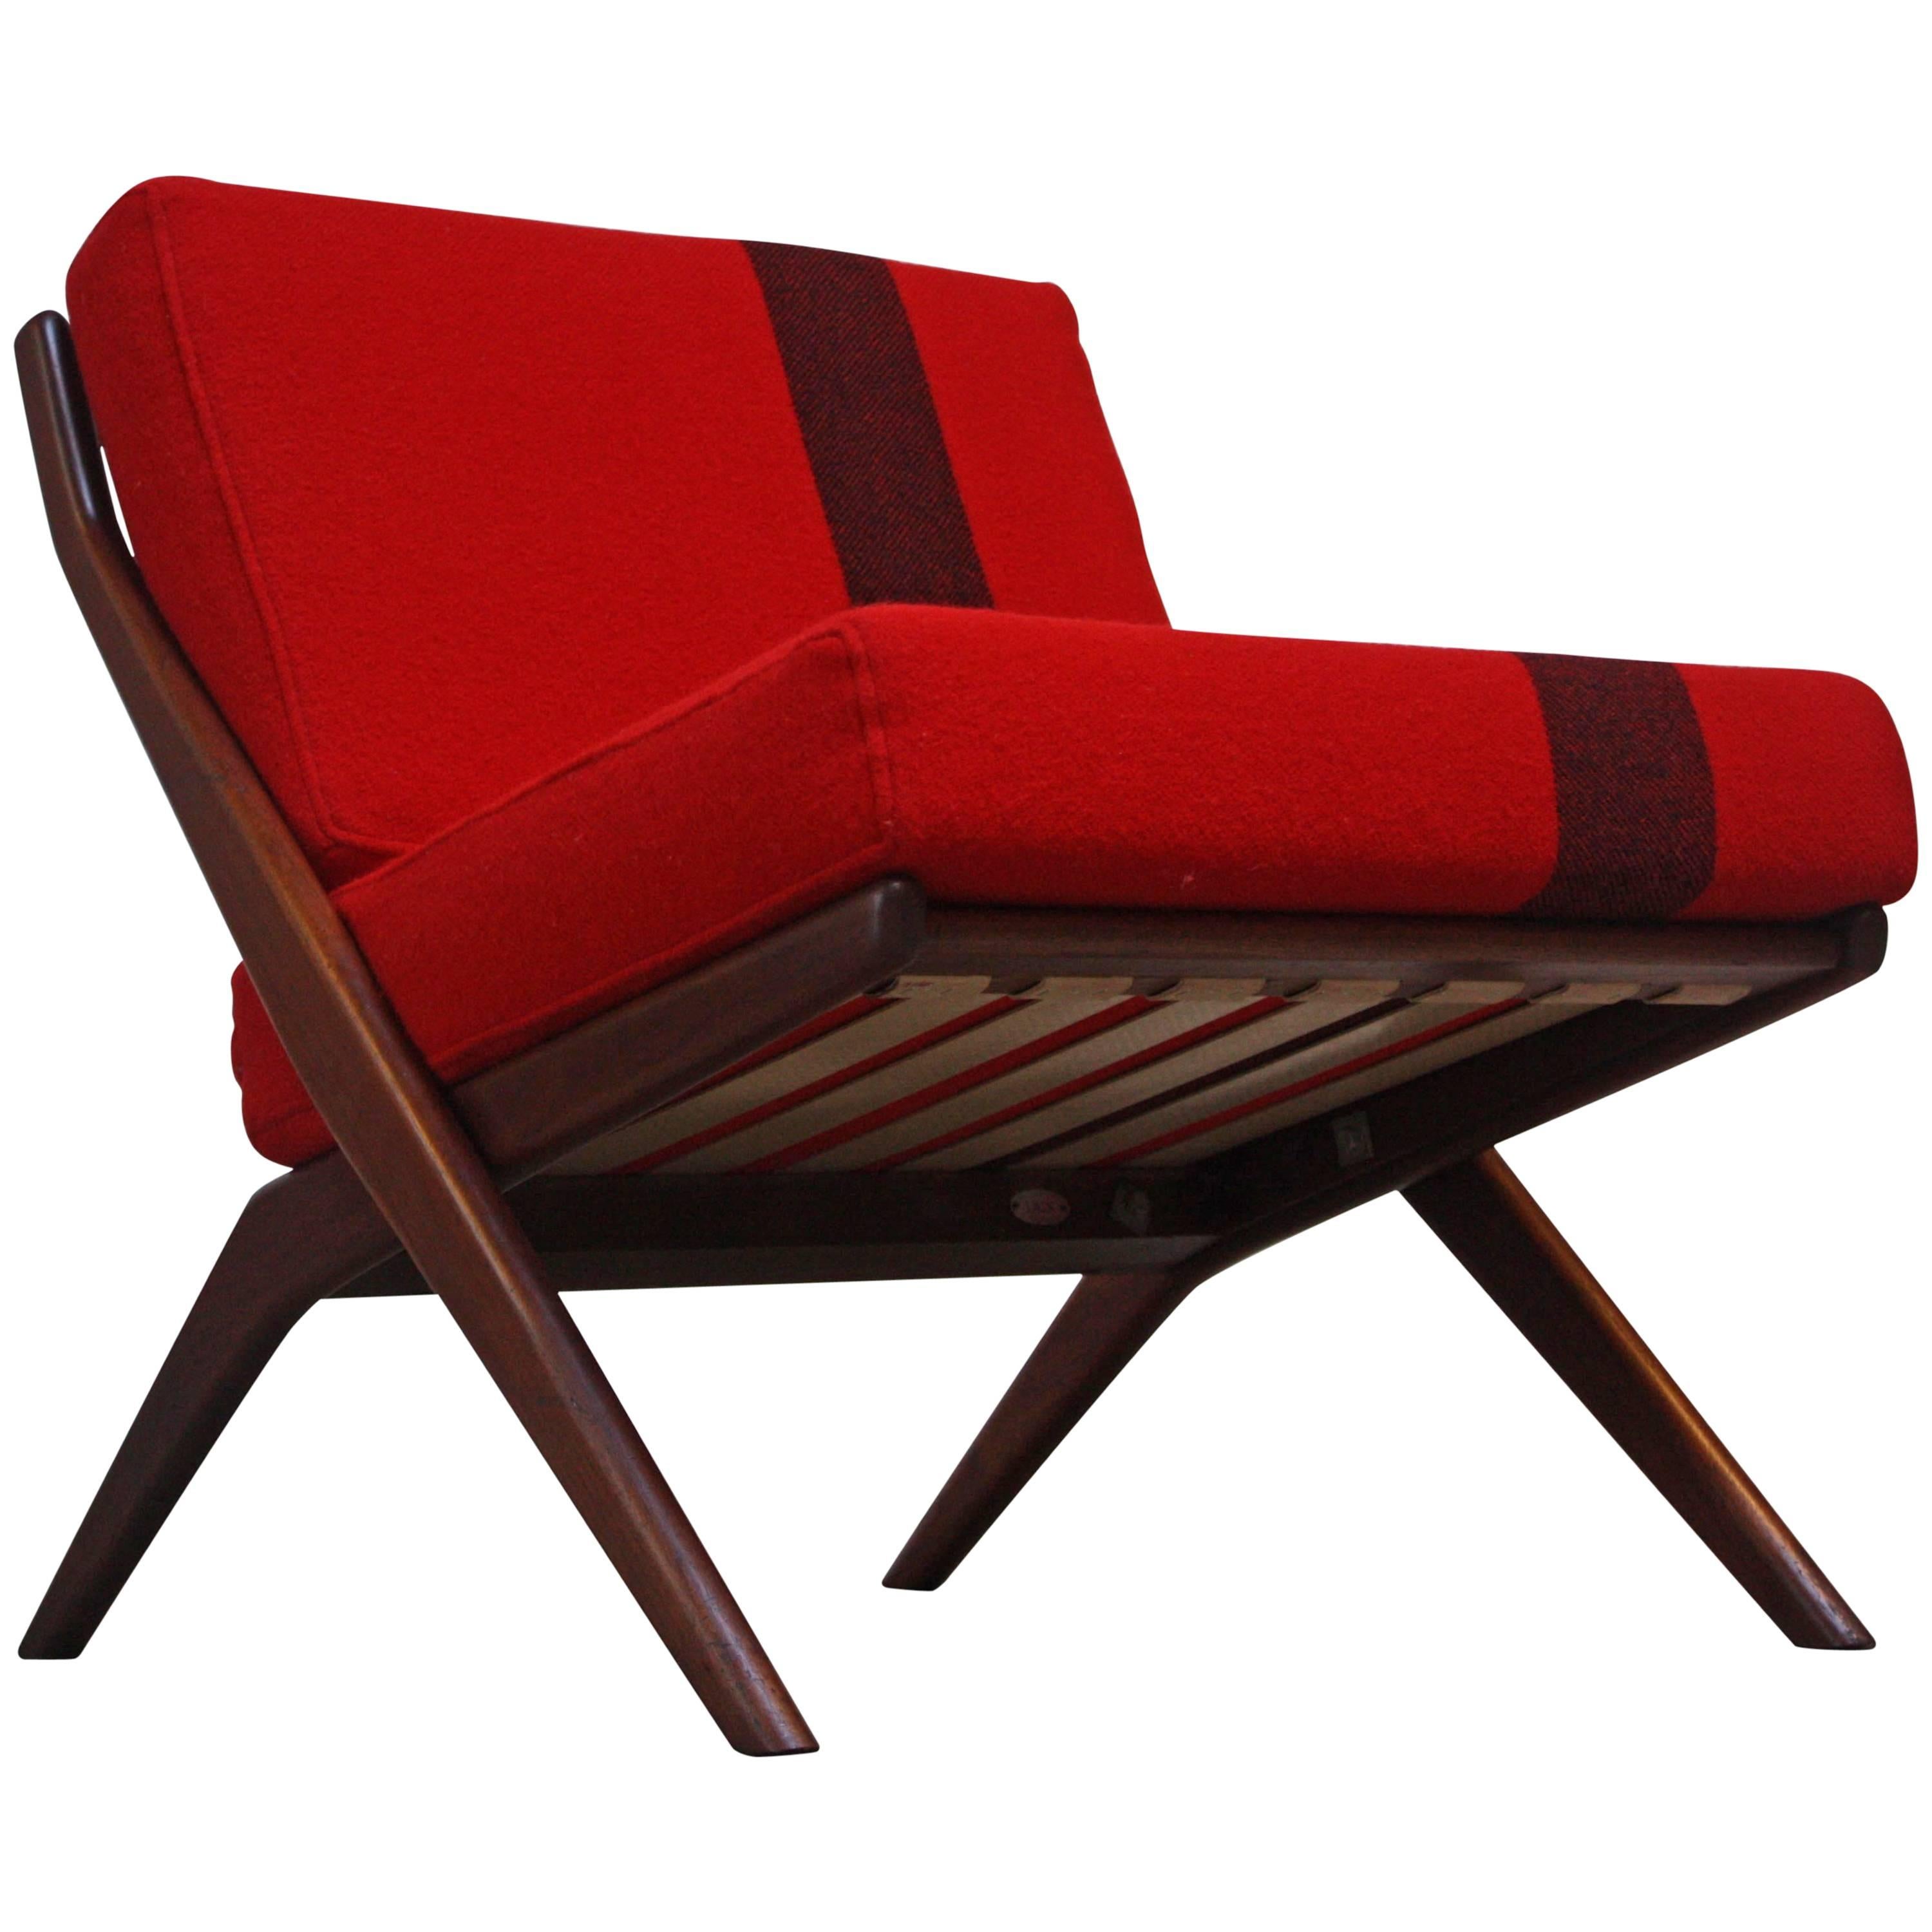 Swedish 'Scissor' Chair by Folke Ohlsson for DUX